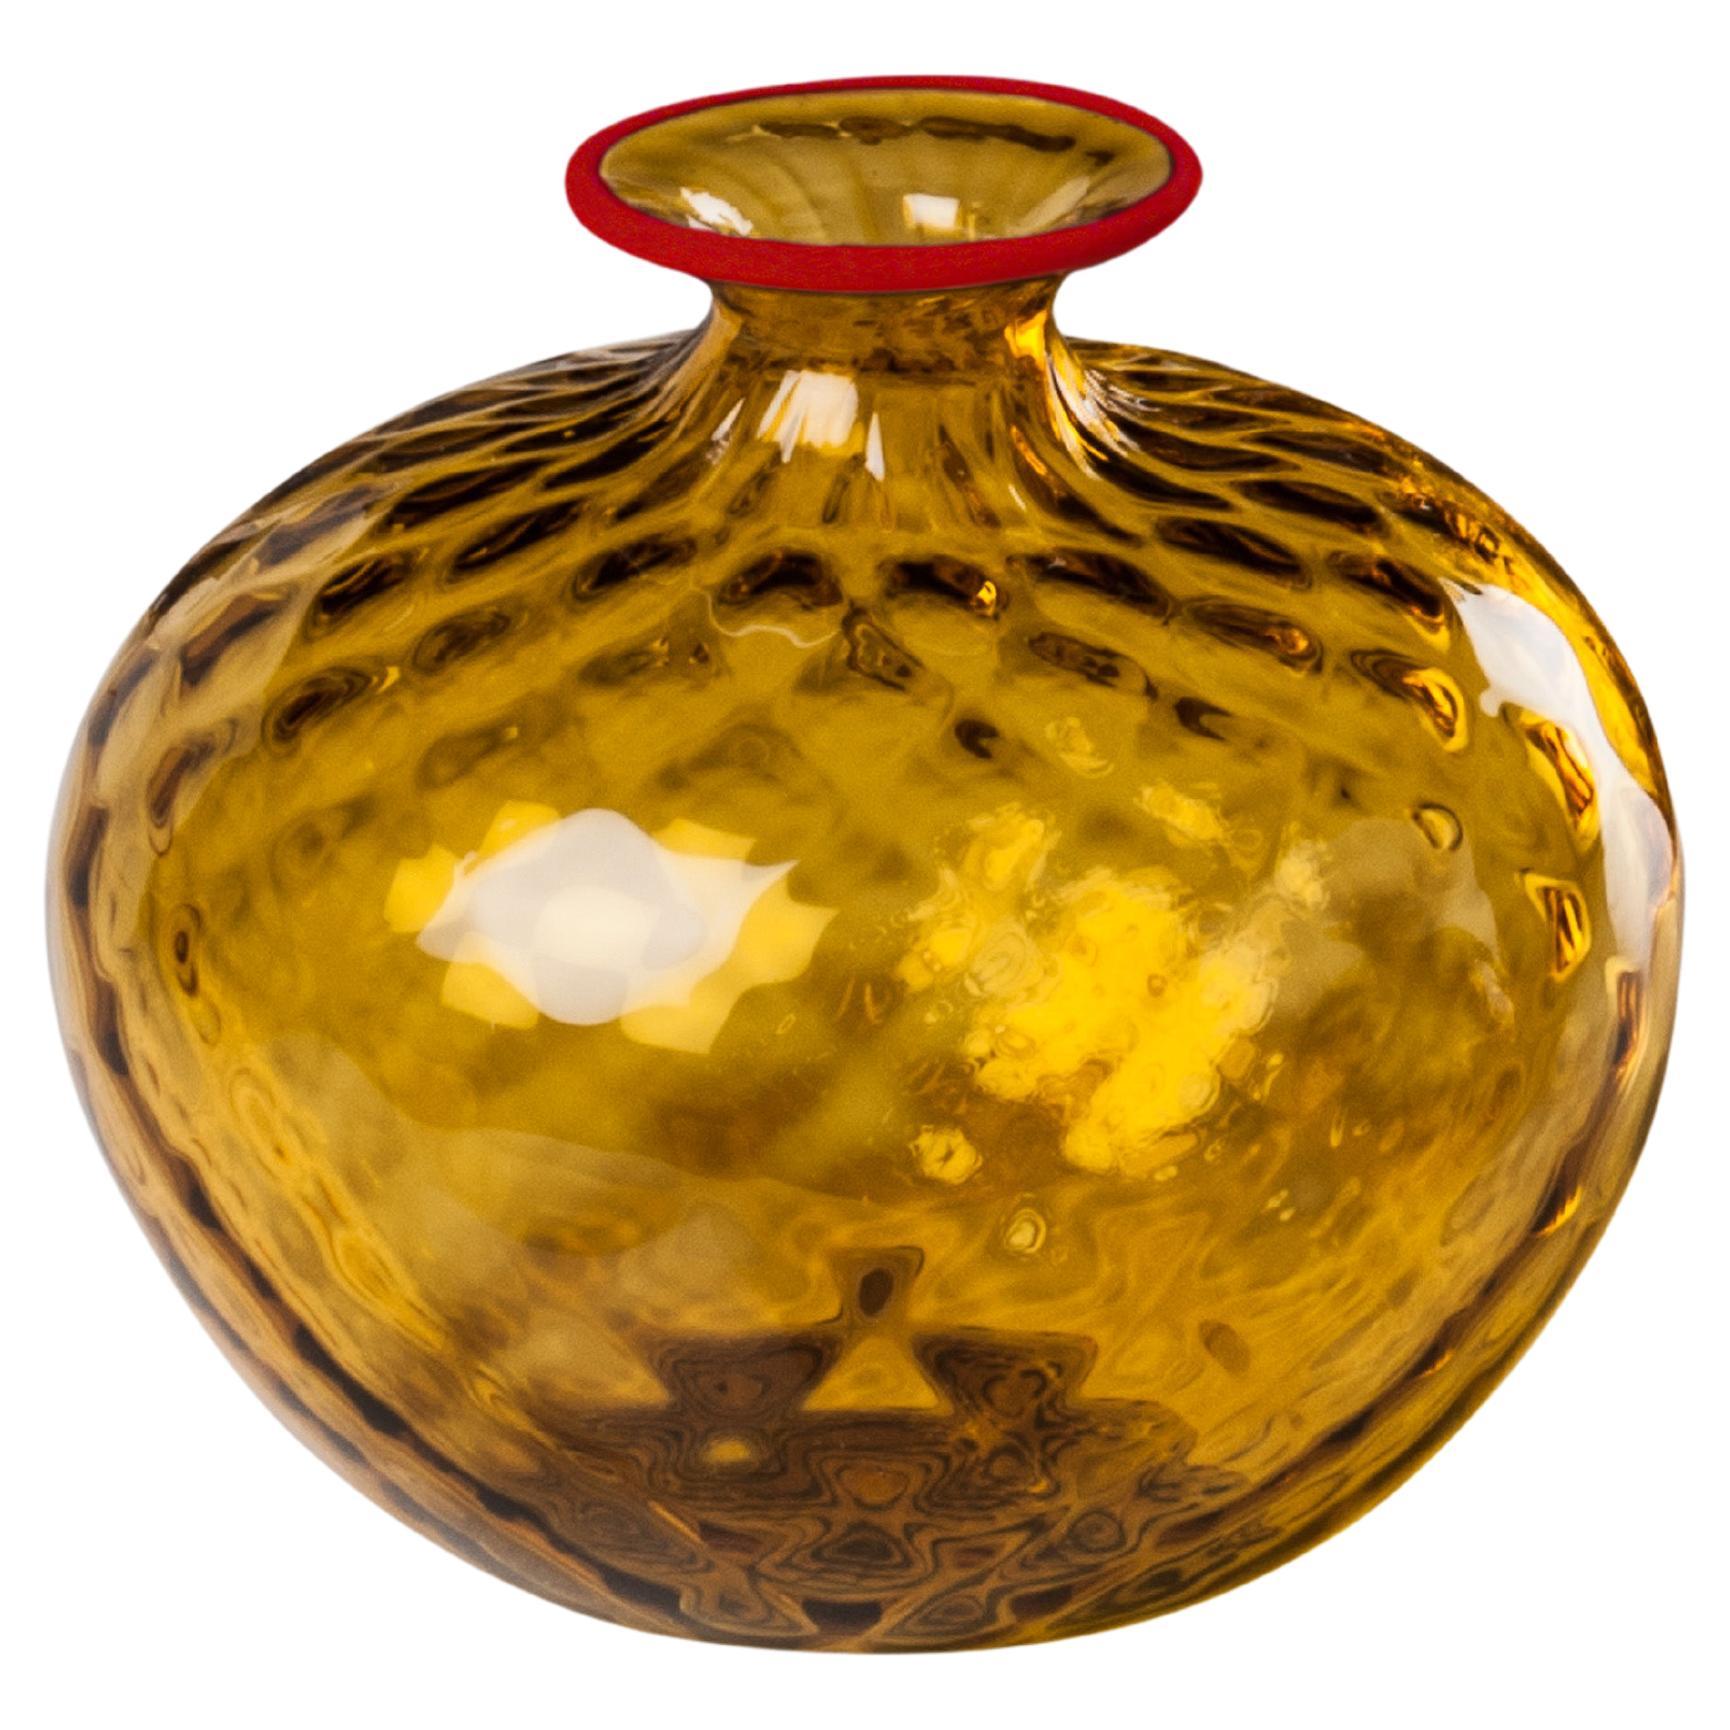 Monofiore Balaton Short Glass Vase in Straw-Yellow Red Thread Rim by Venini For Sale